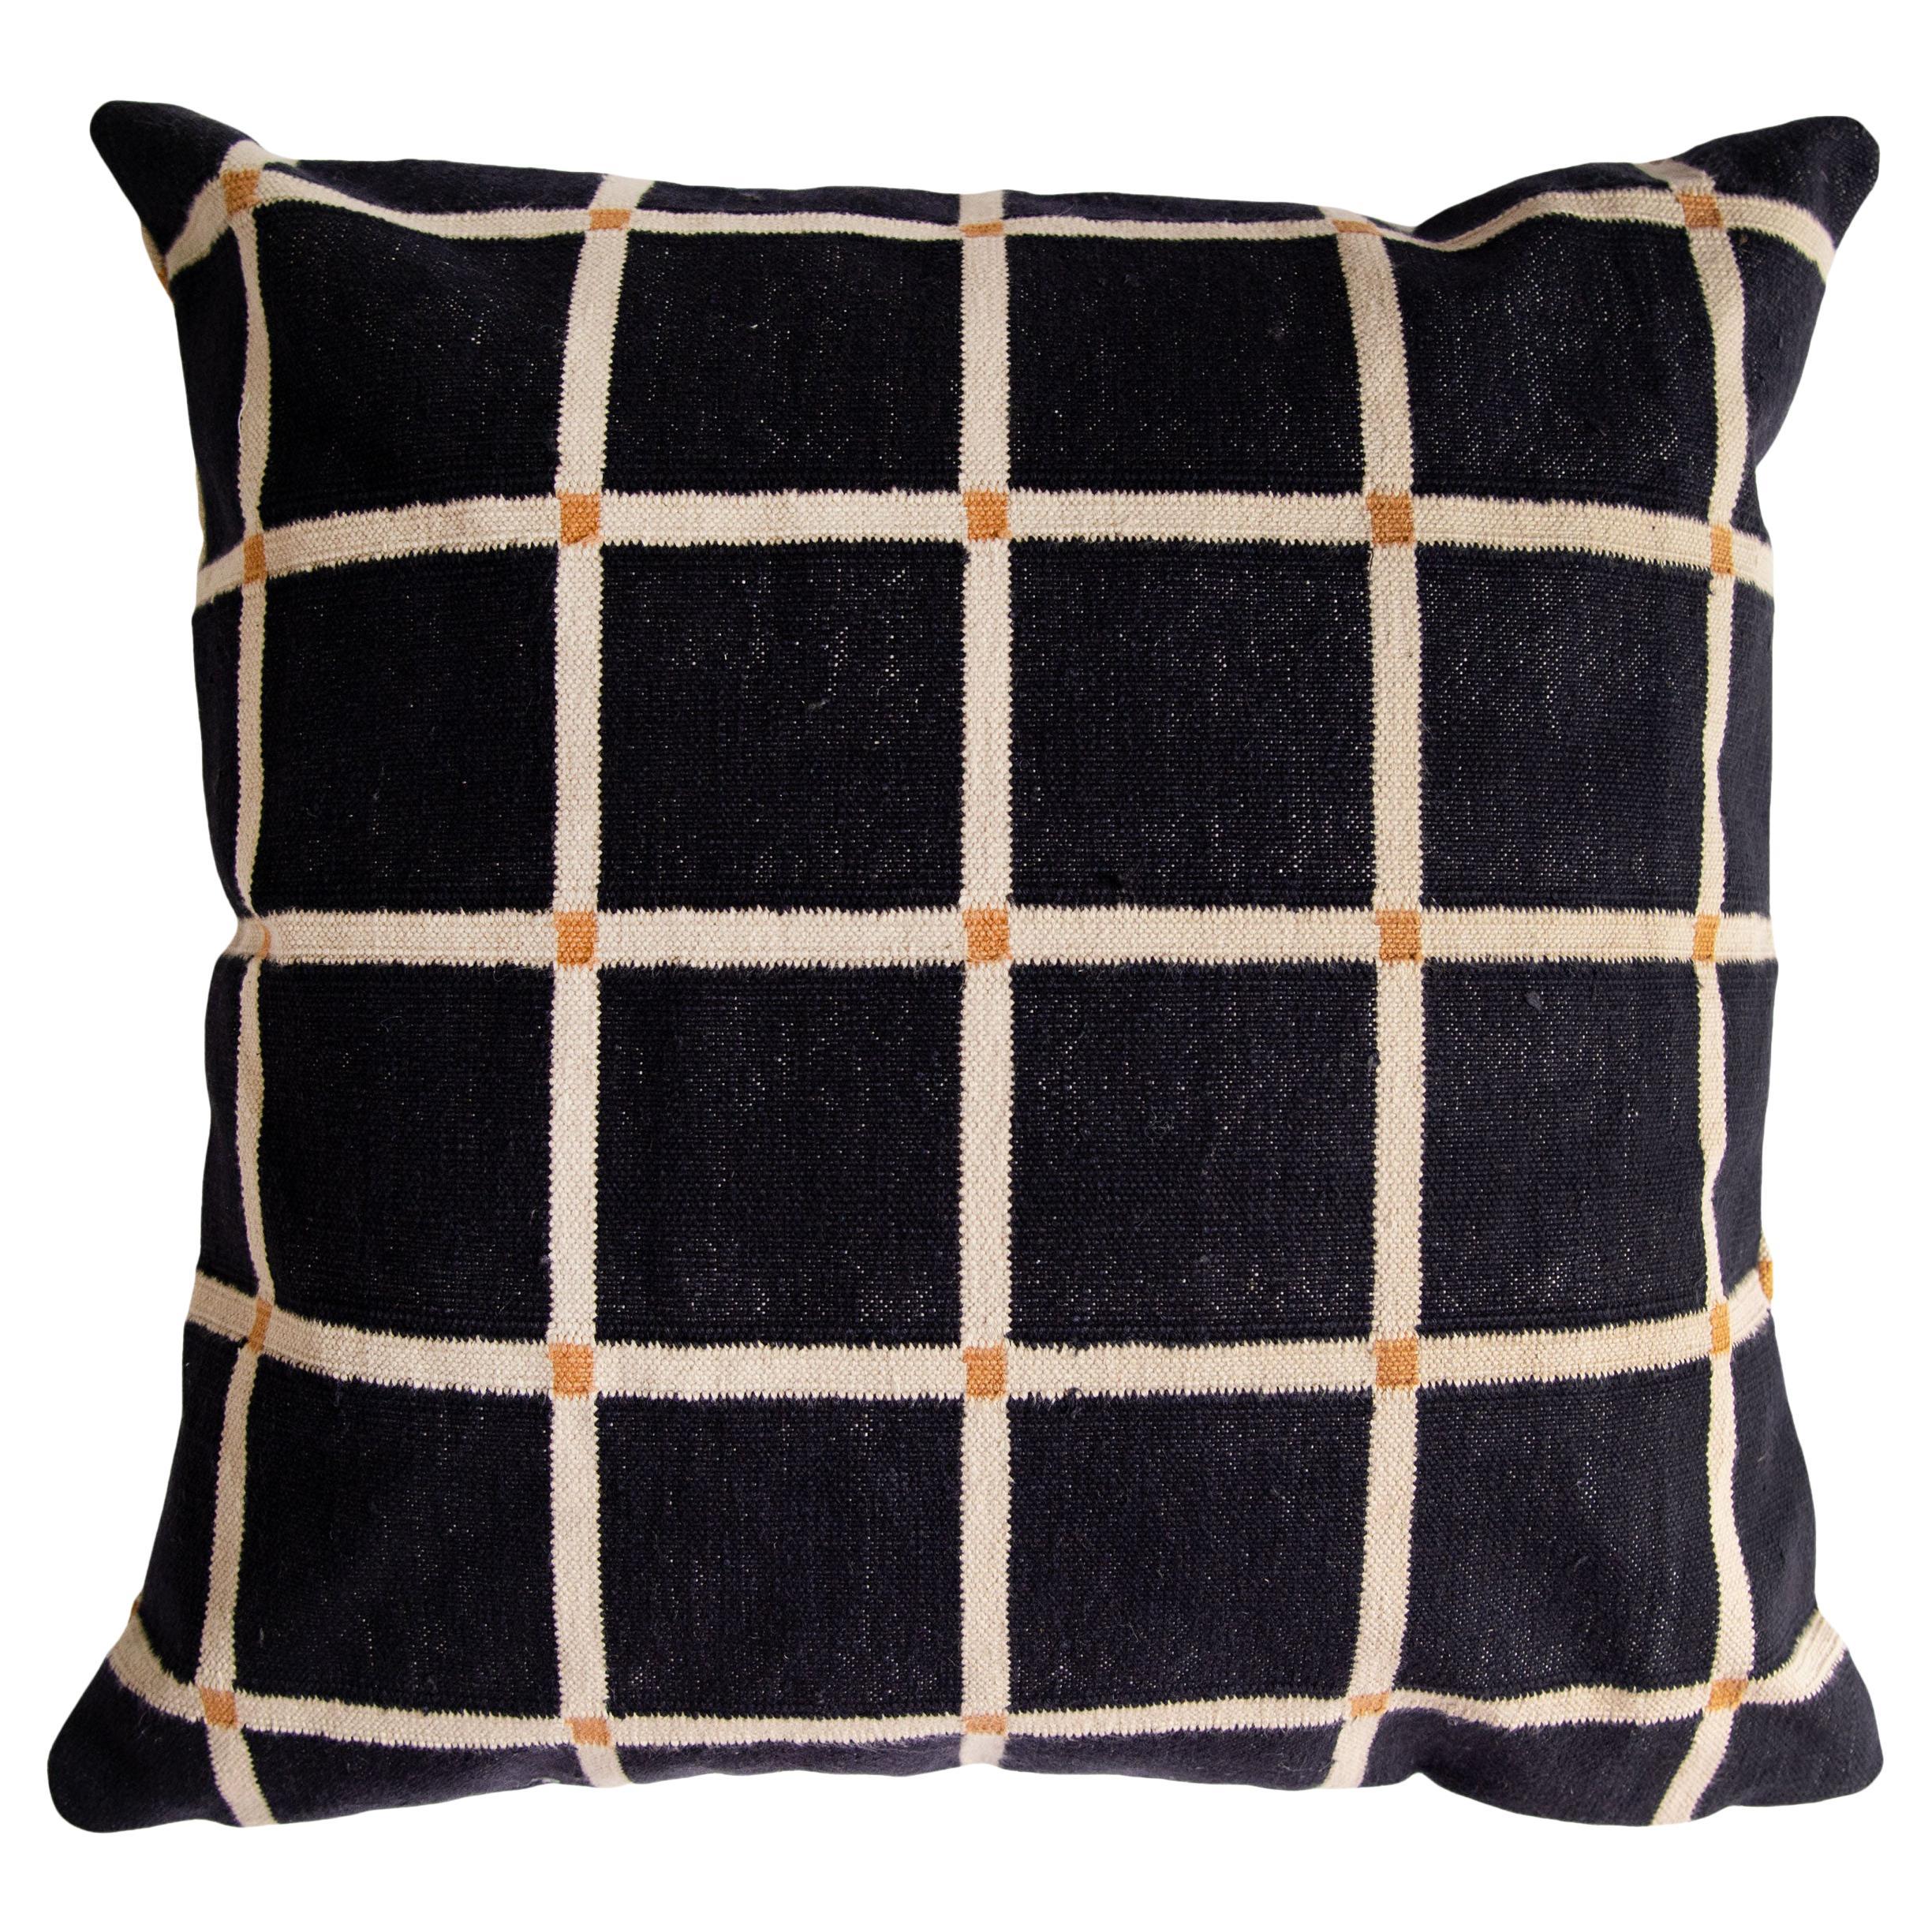 Geometric Grid Pillow, Reversible Black + Tan